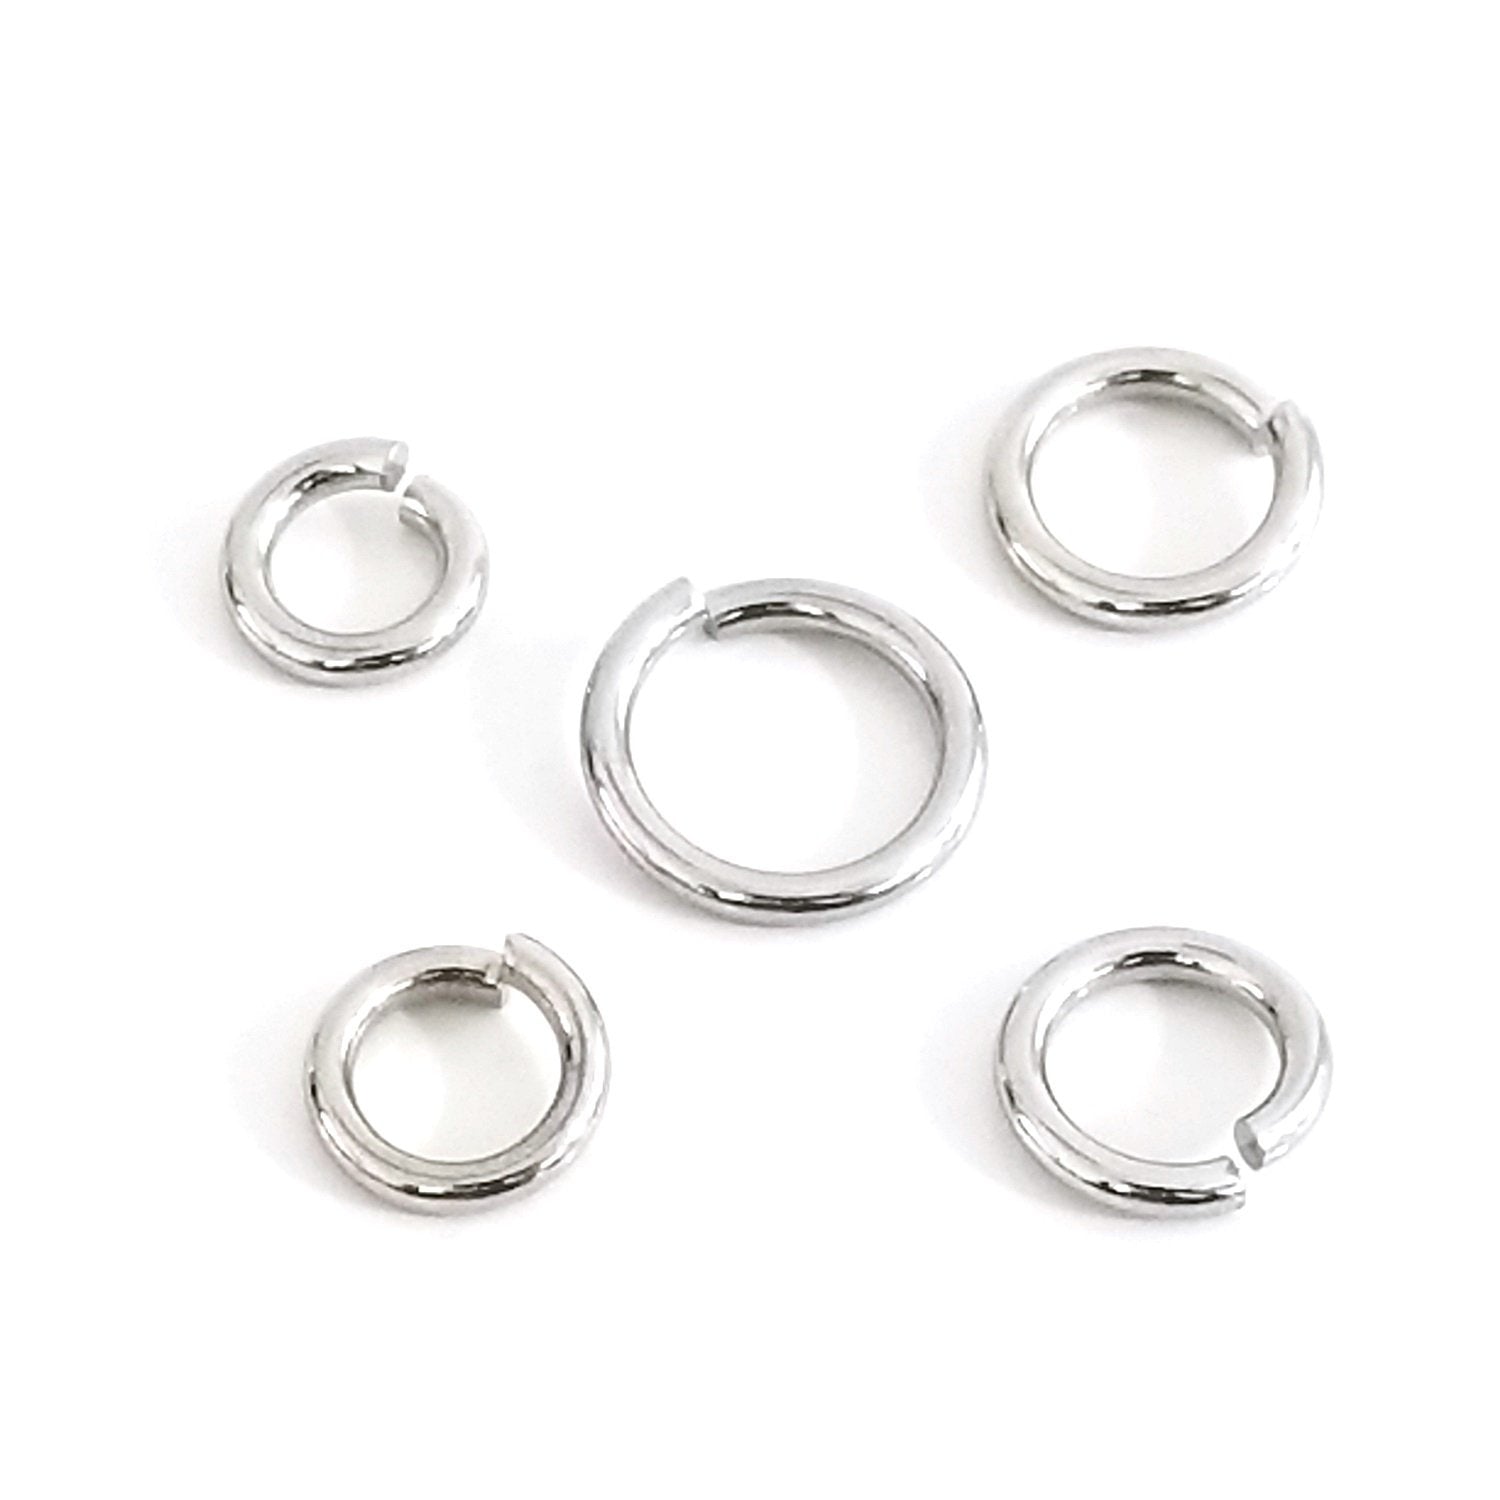 Stainless Steel Jump Rings - 10mm